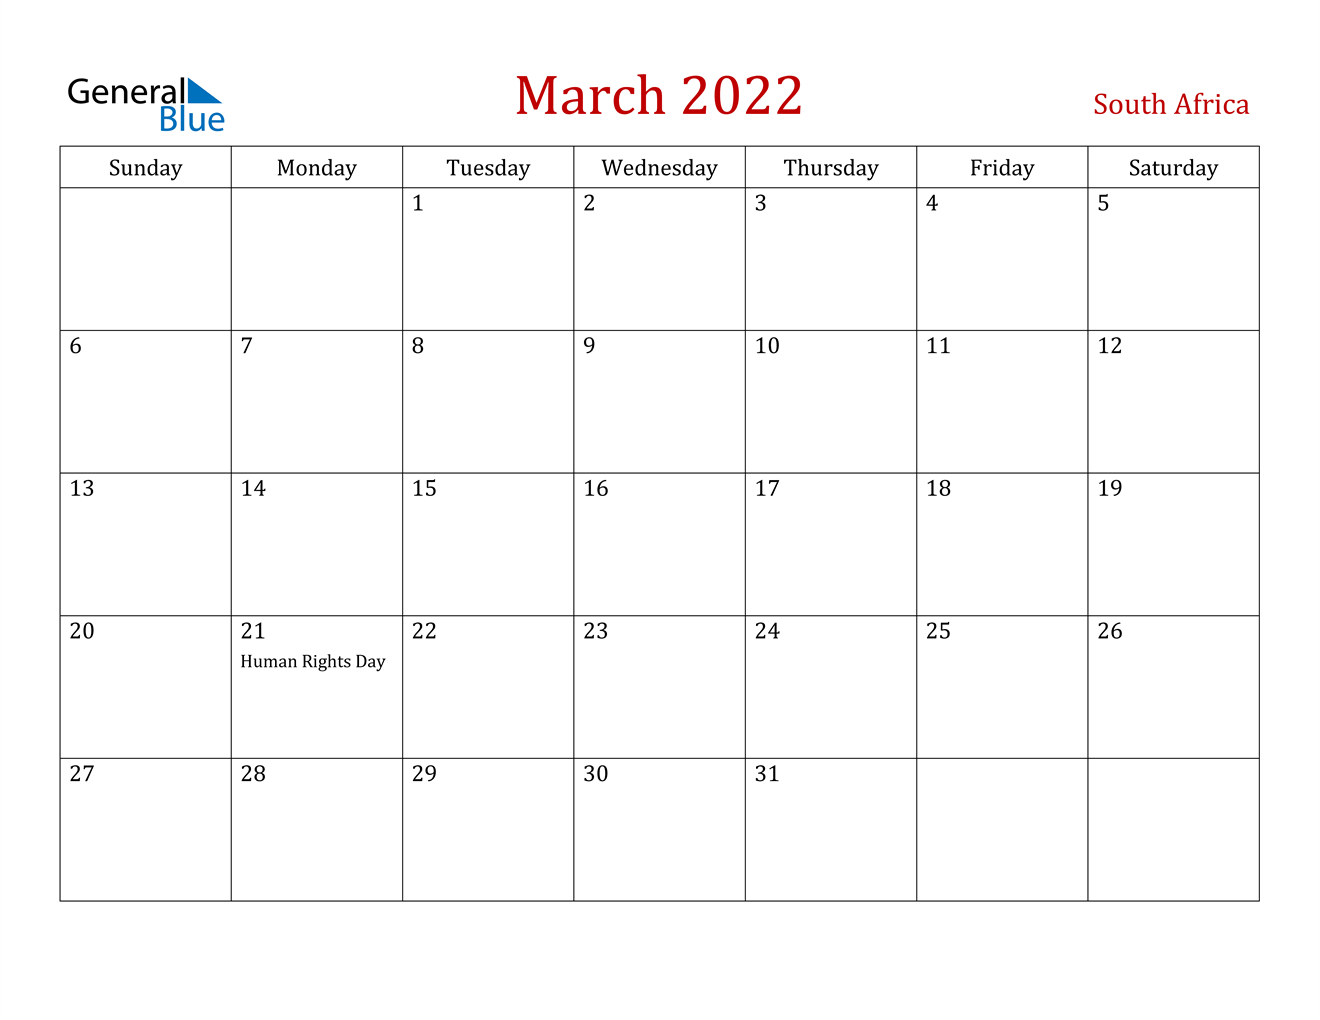 March 2022 Calendar - South Africa